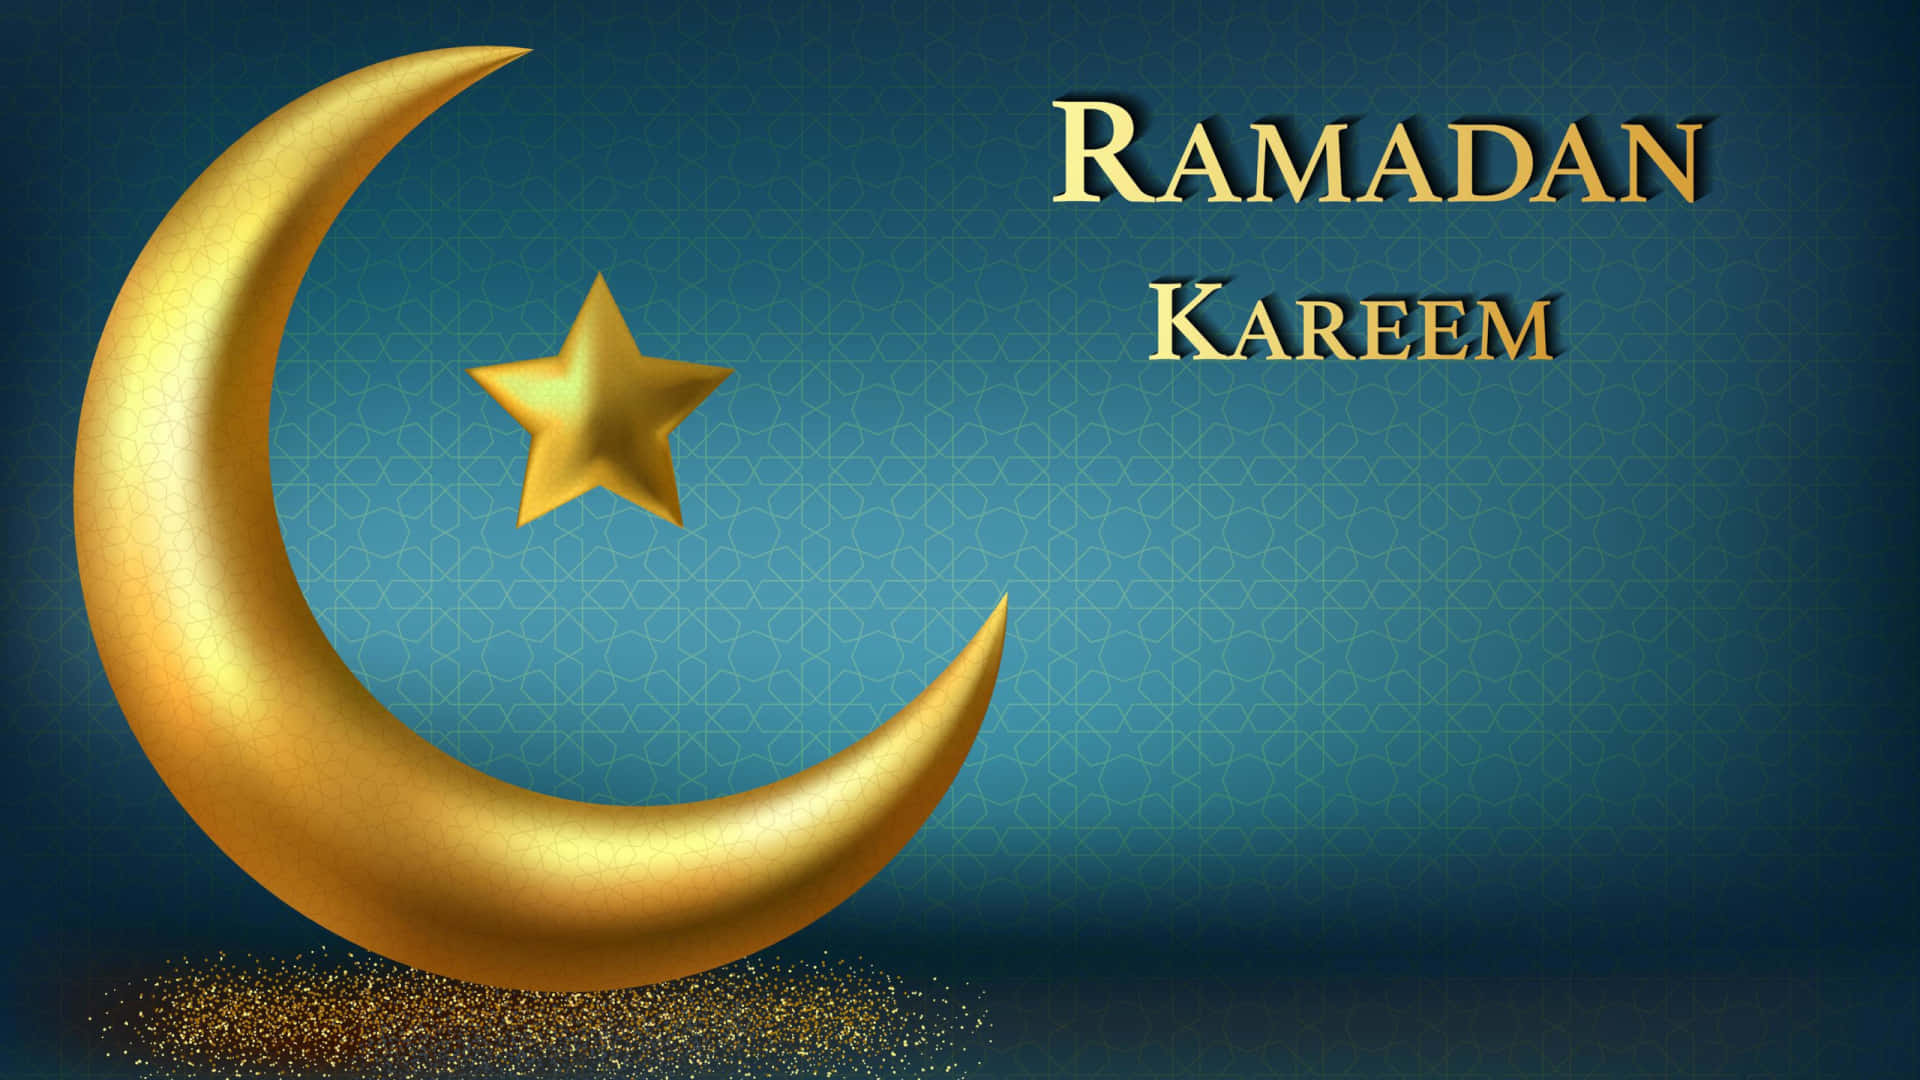 Celebrate Ramadan with Joy and Spiritual Fulfillment